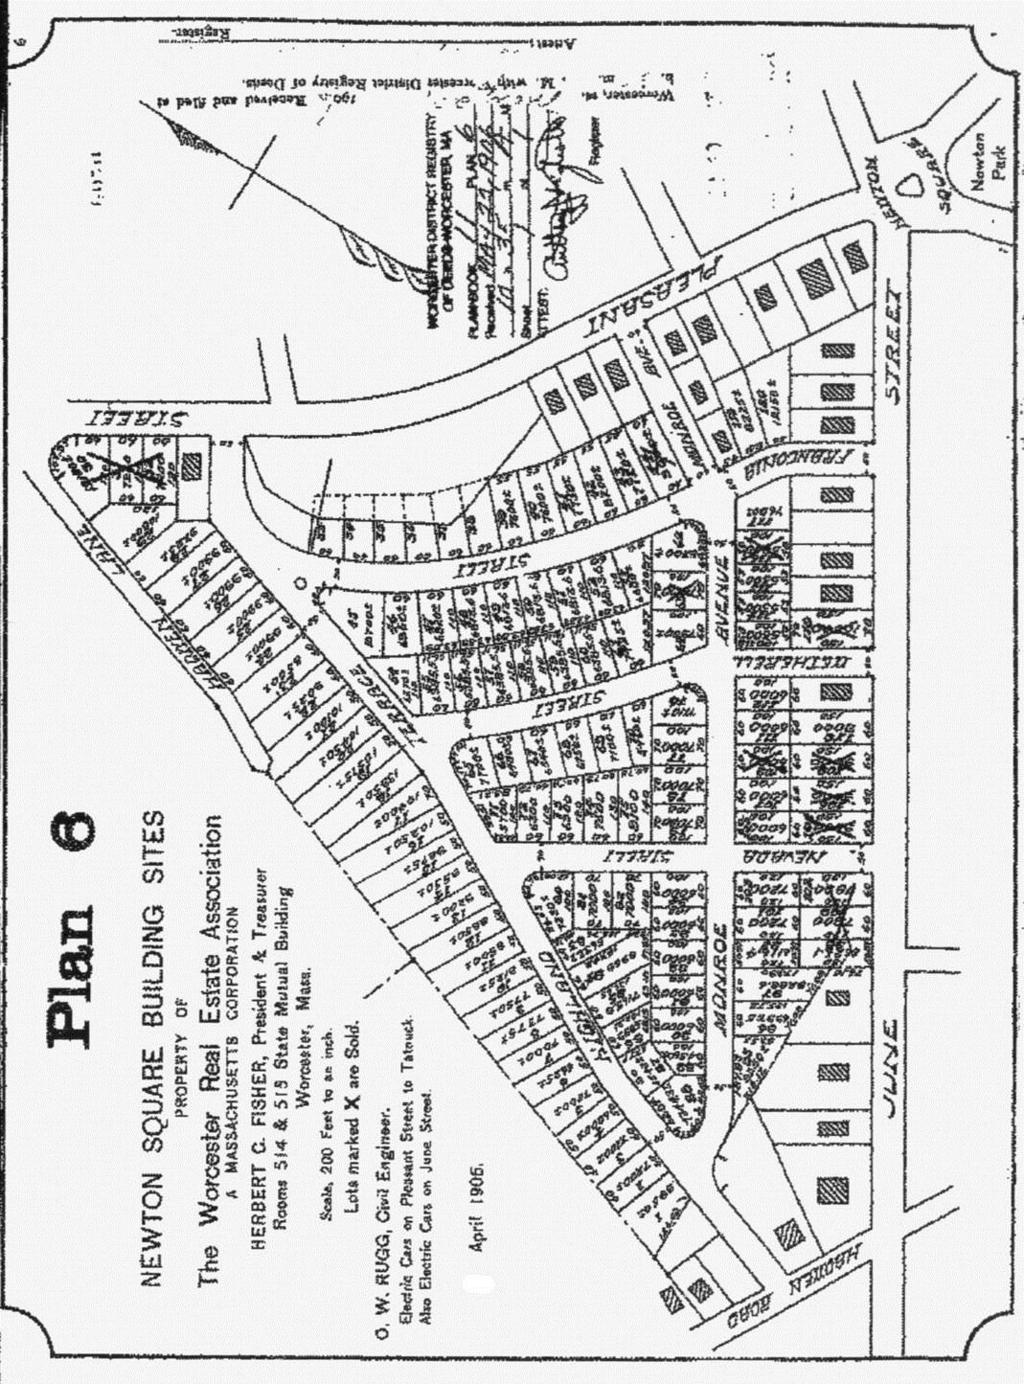 Supplement 2-J Plan of Newton Square Worcester Real Estate Associates,